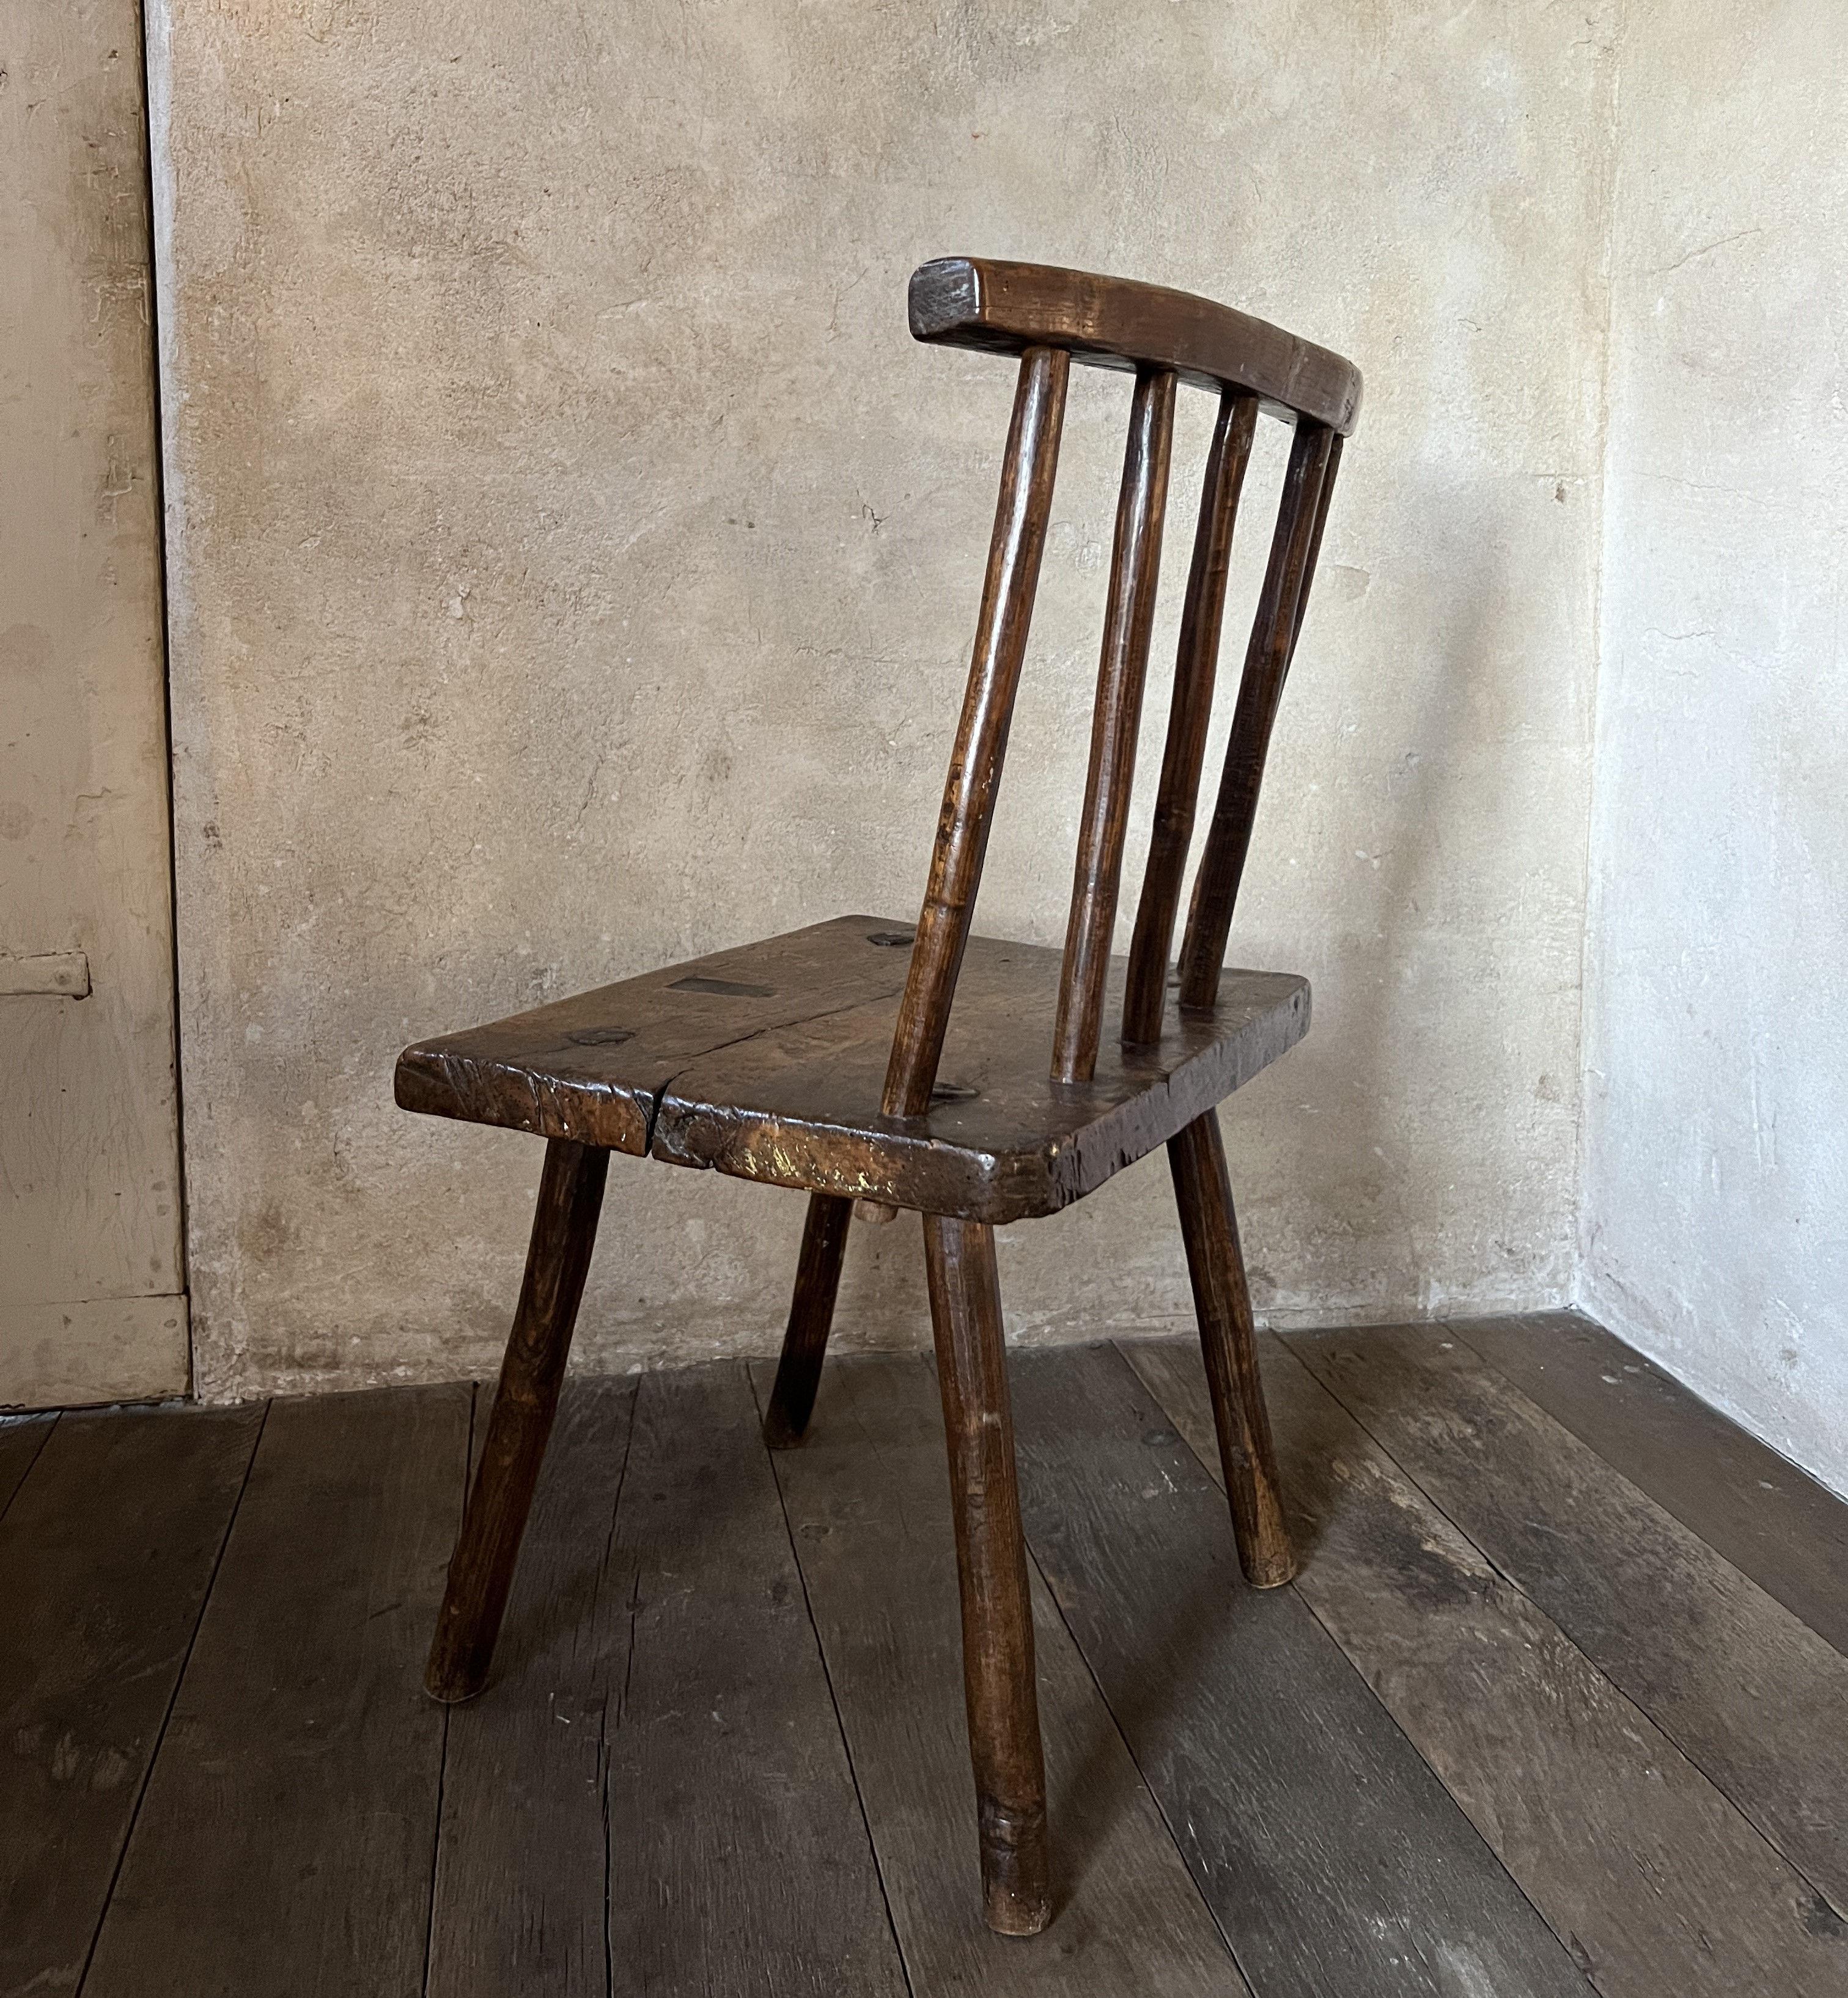 19th Century Primitive 19th century chair